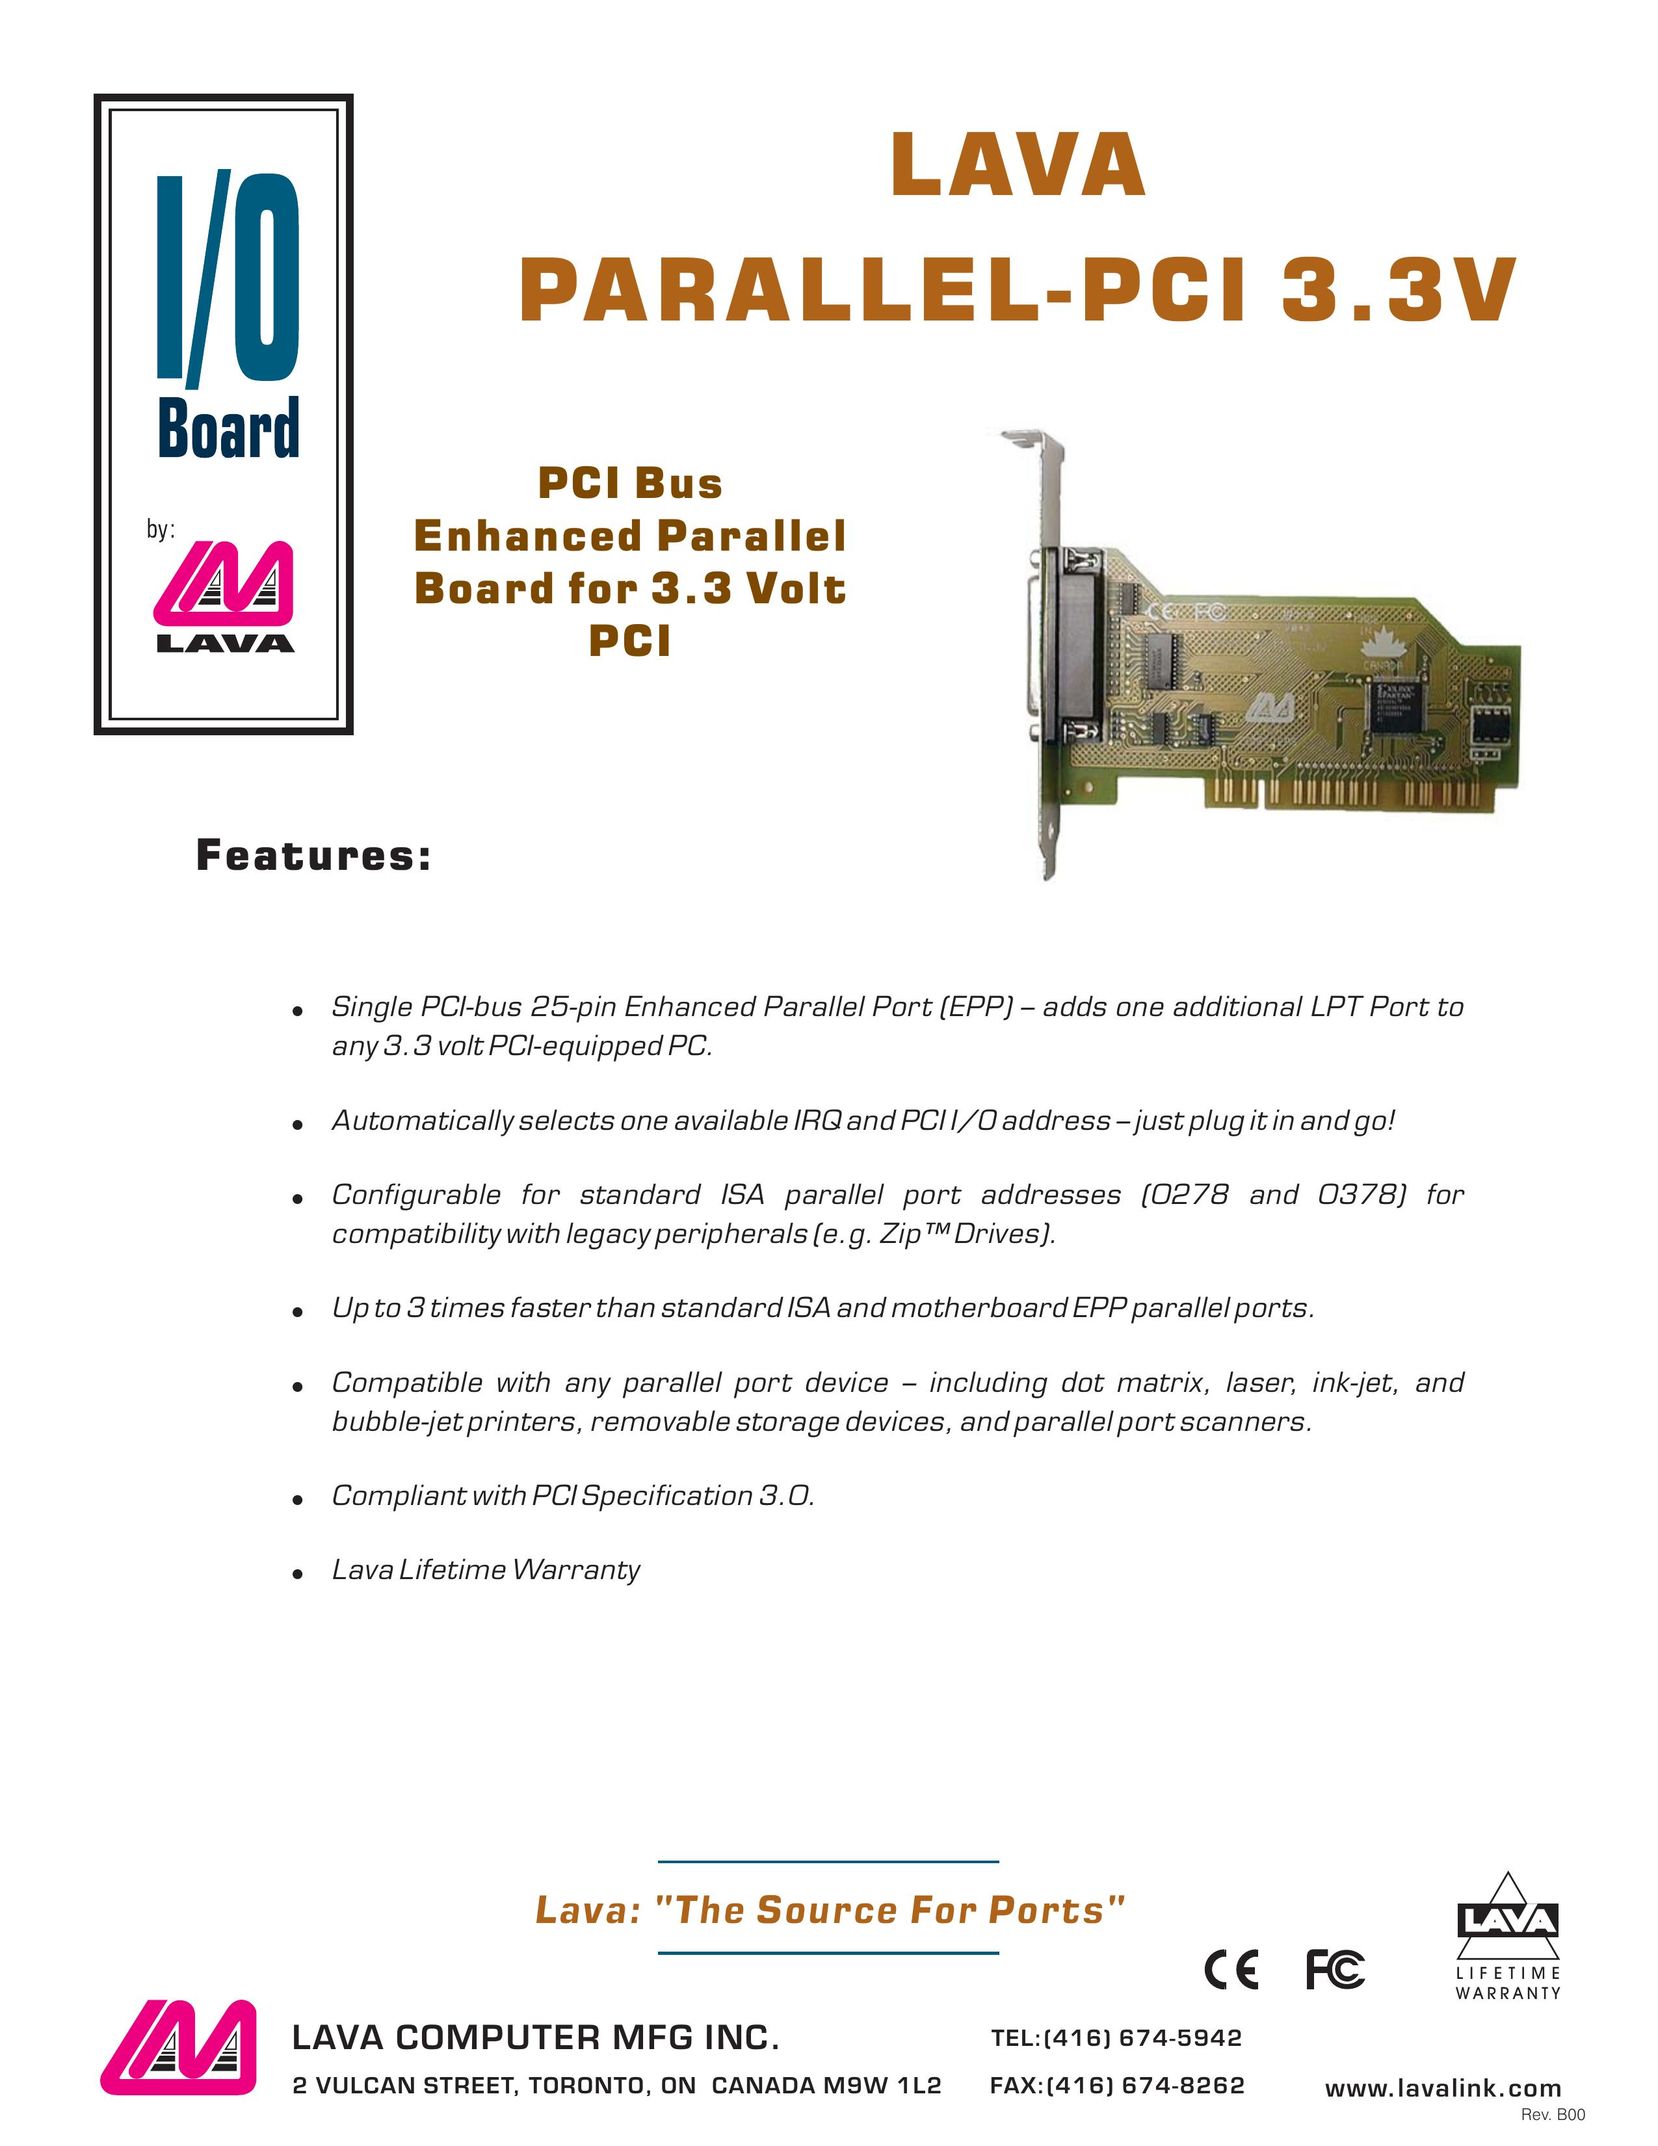 Lava Computer PCI Bus Enhanced Parallel Board Computer Hardware User Manual